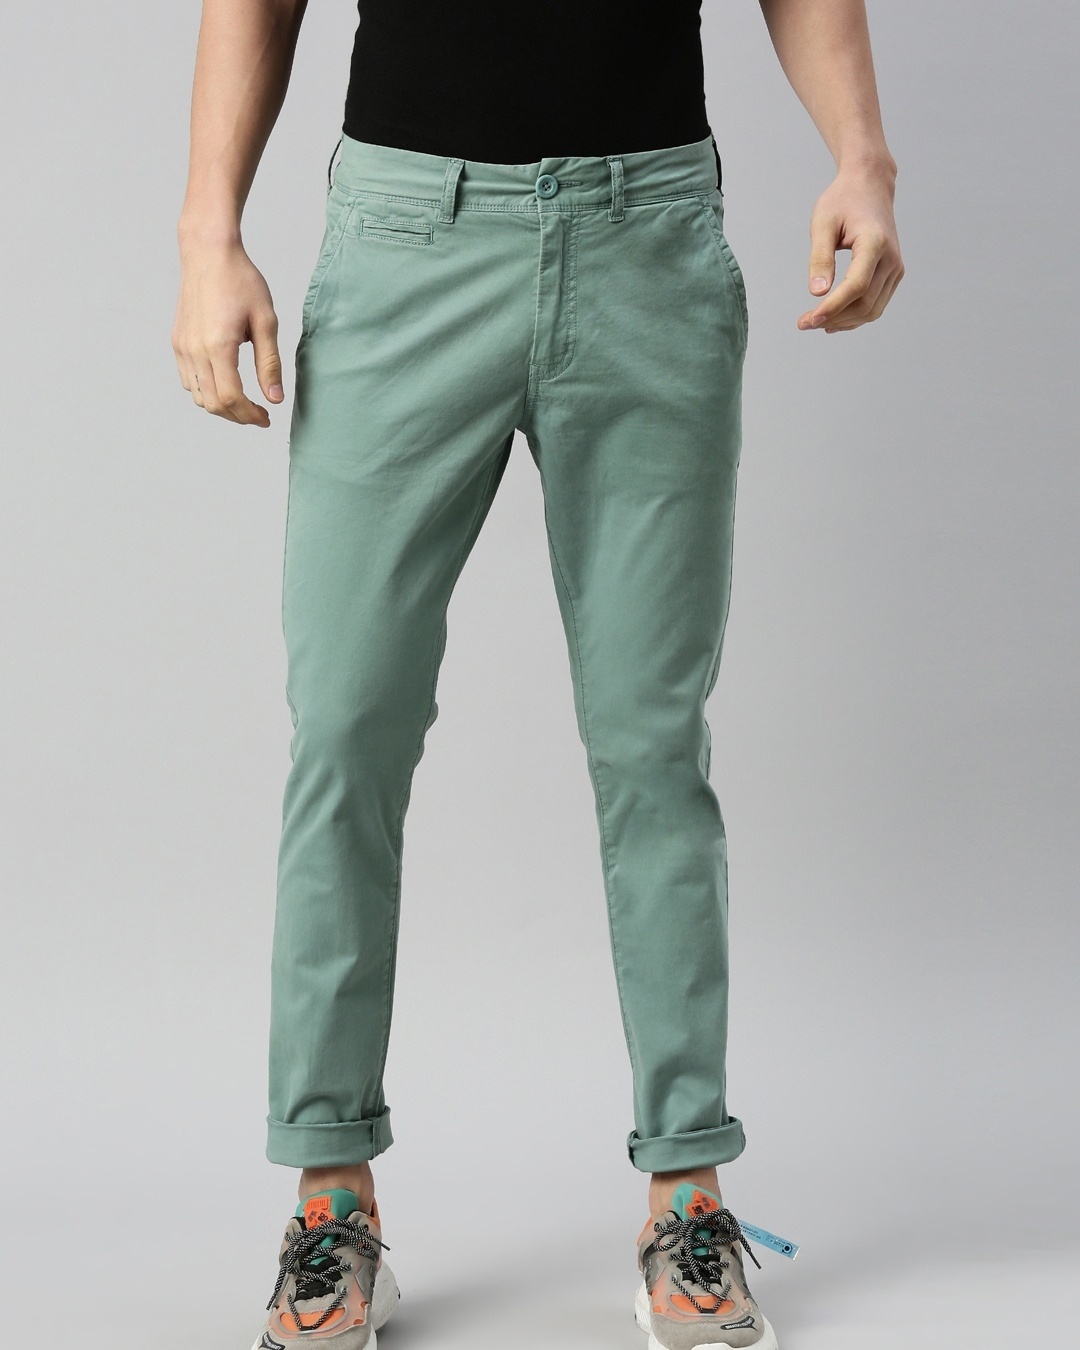 Buy Cream Trousers  Pants for Men by URBANO FASHION Online  Ajiocom